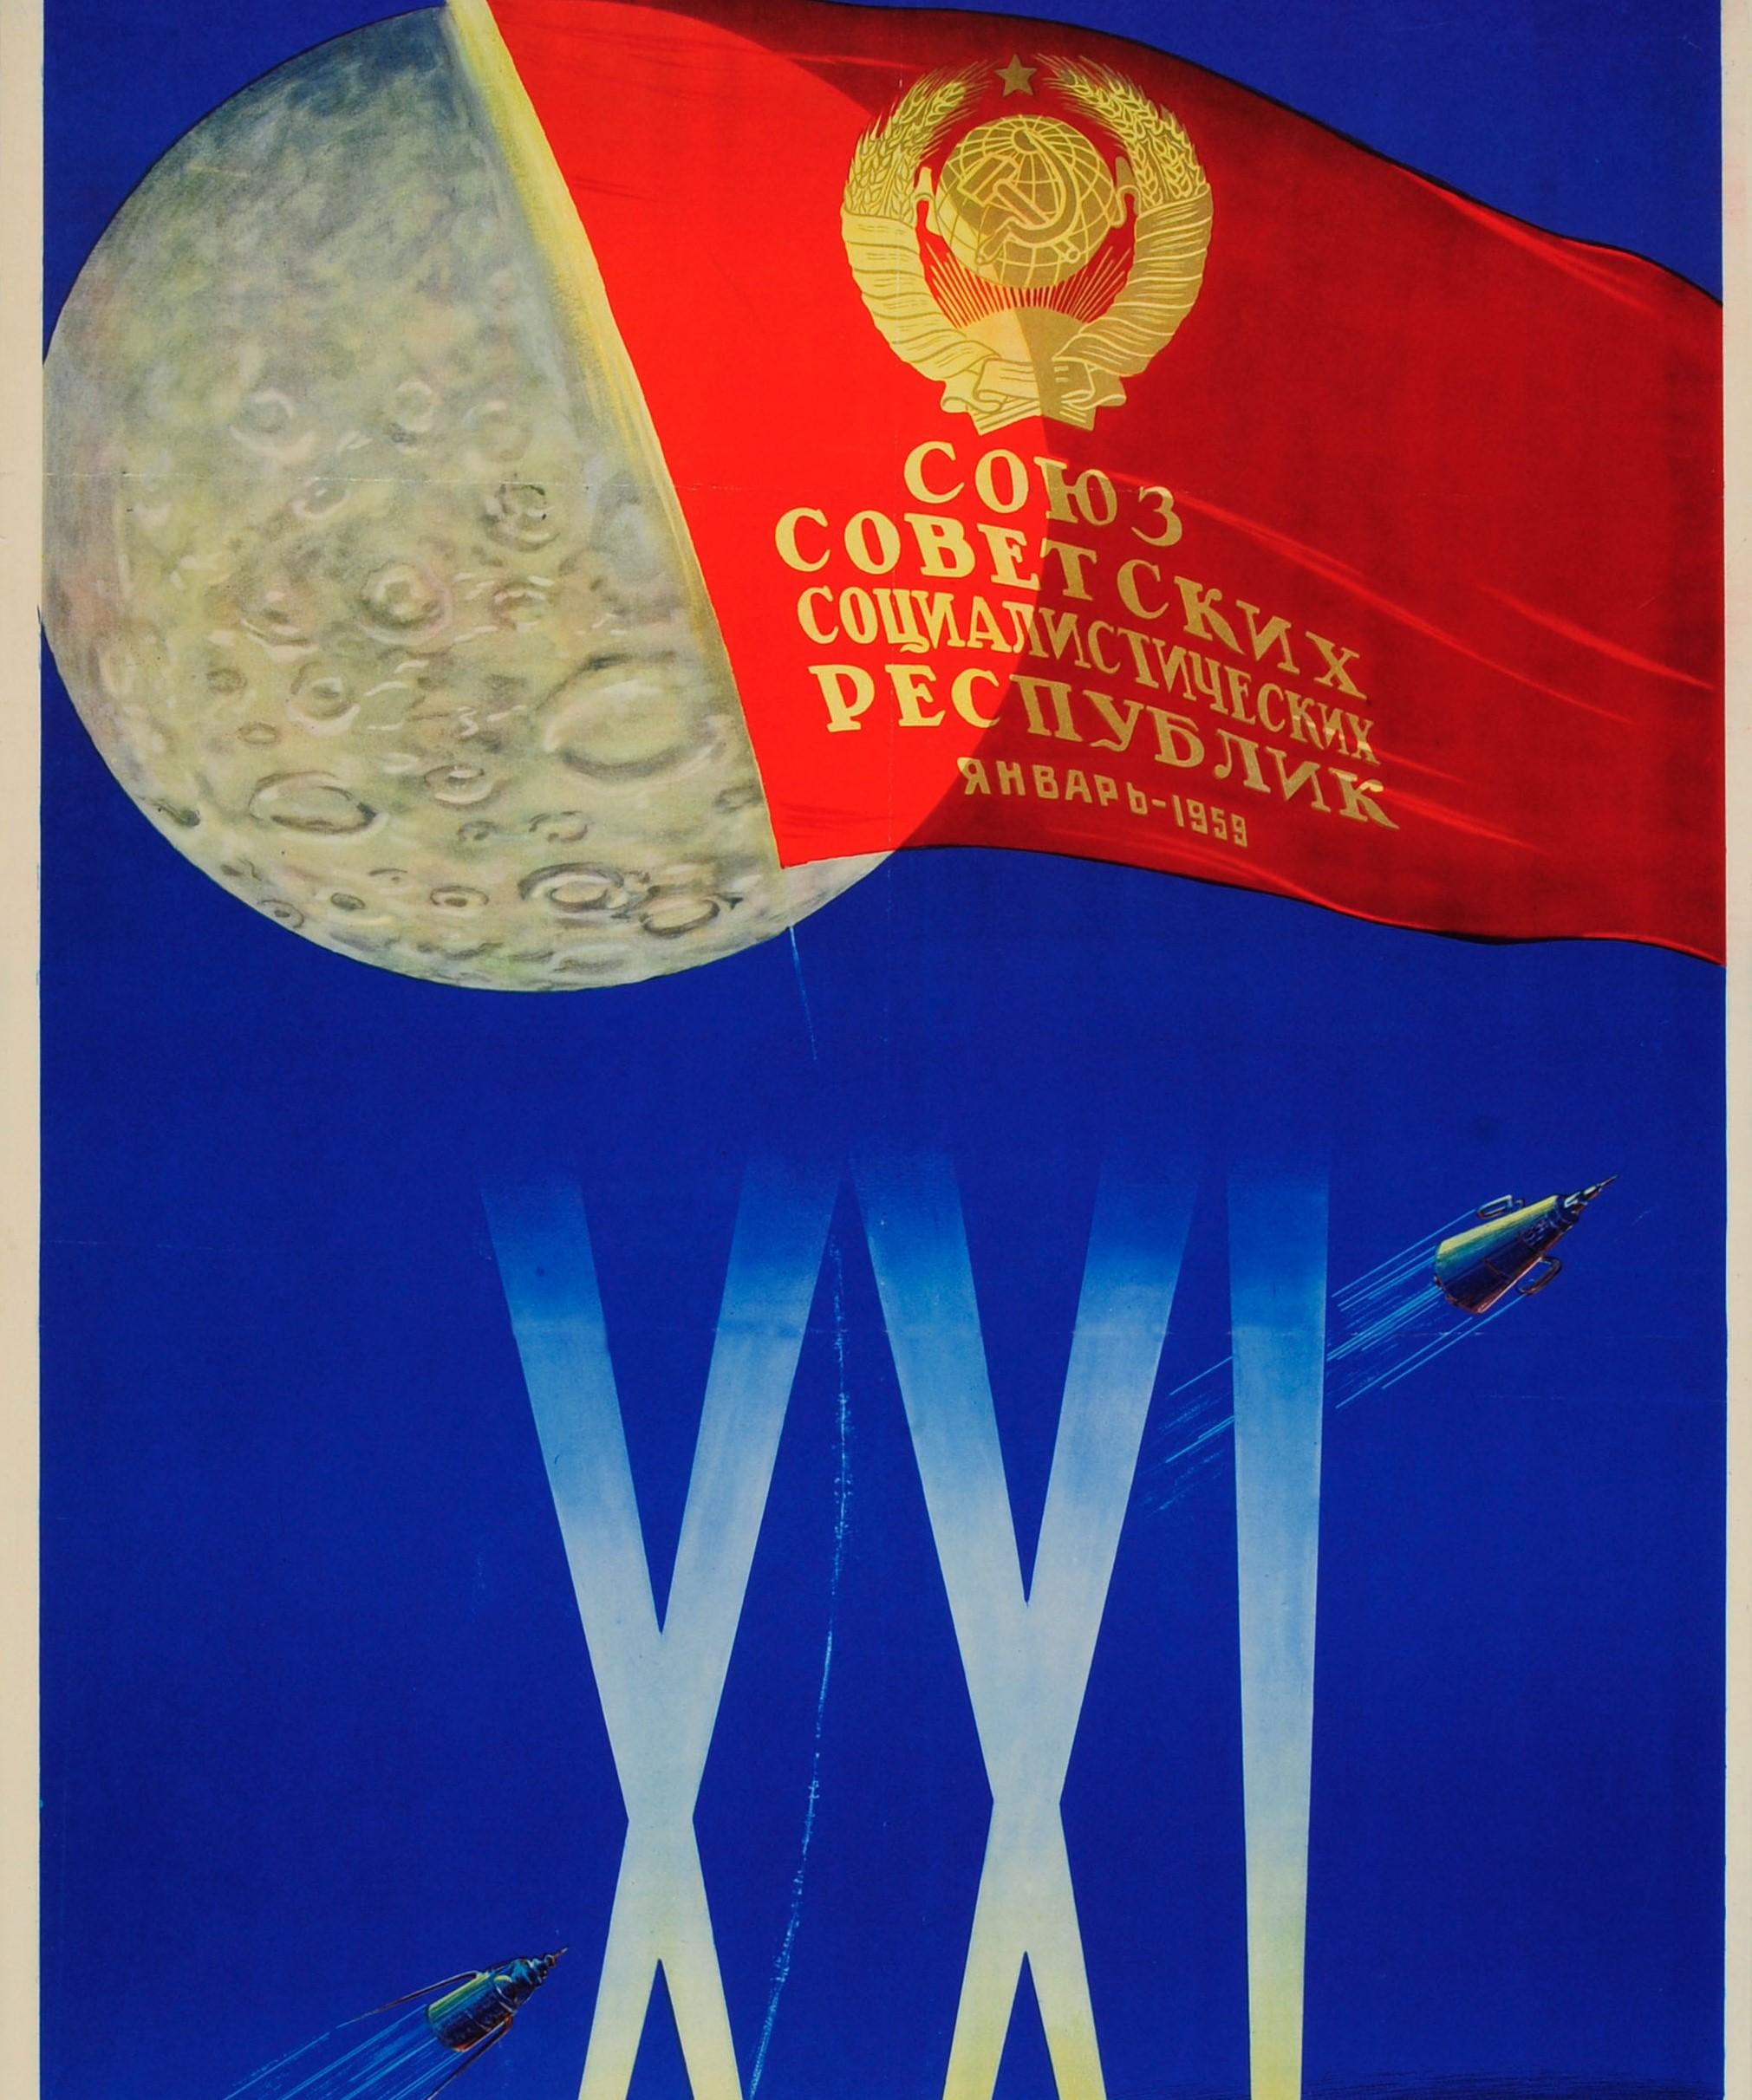 sputnik propaganda poster